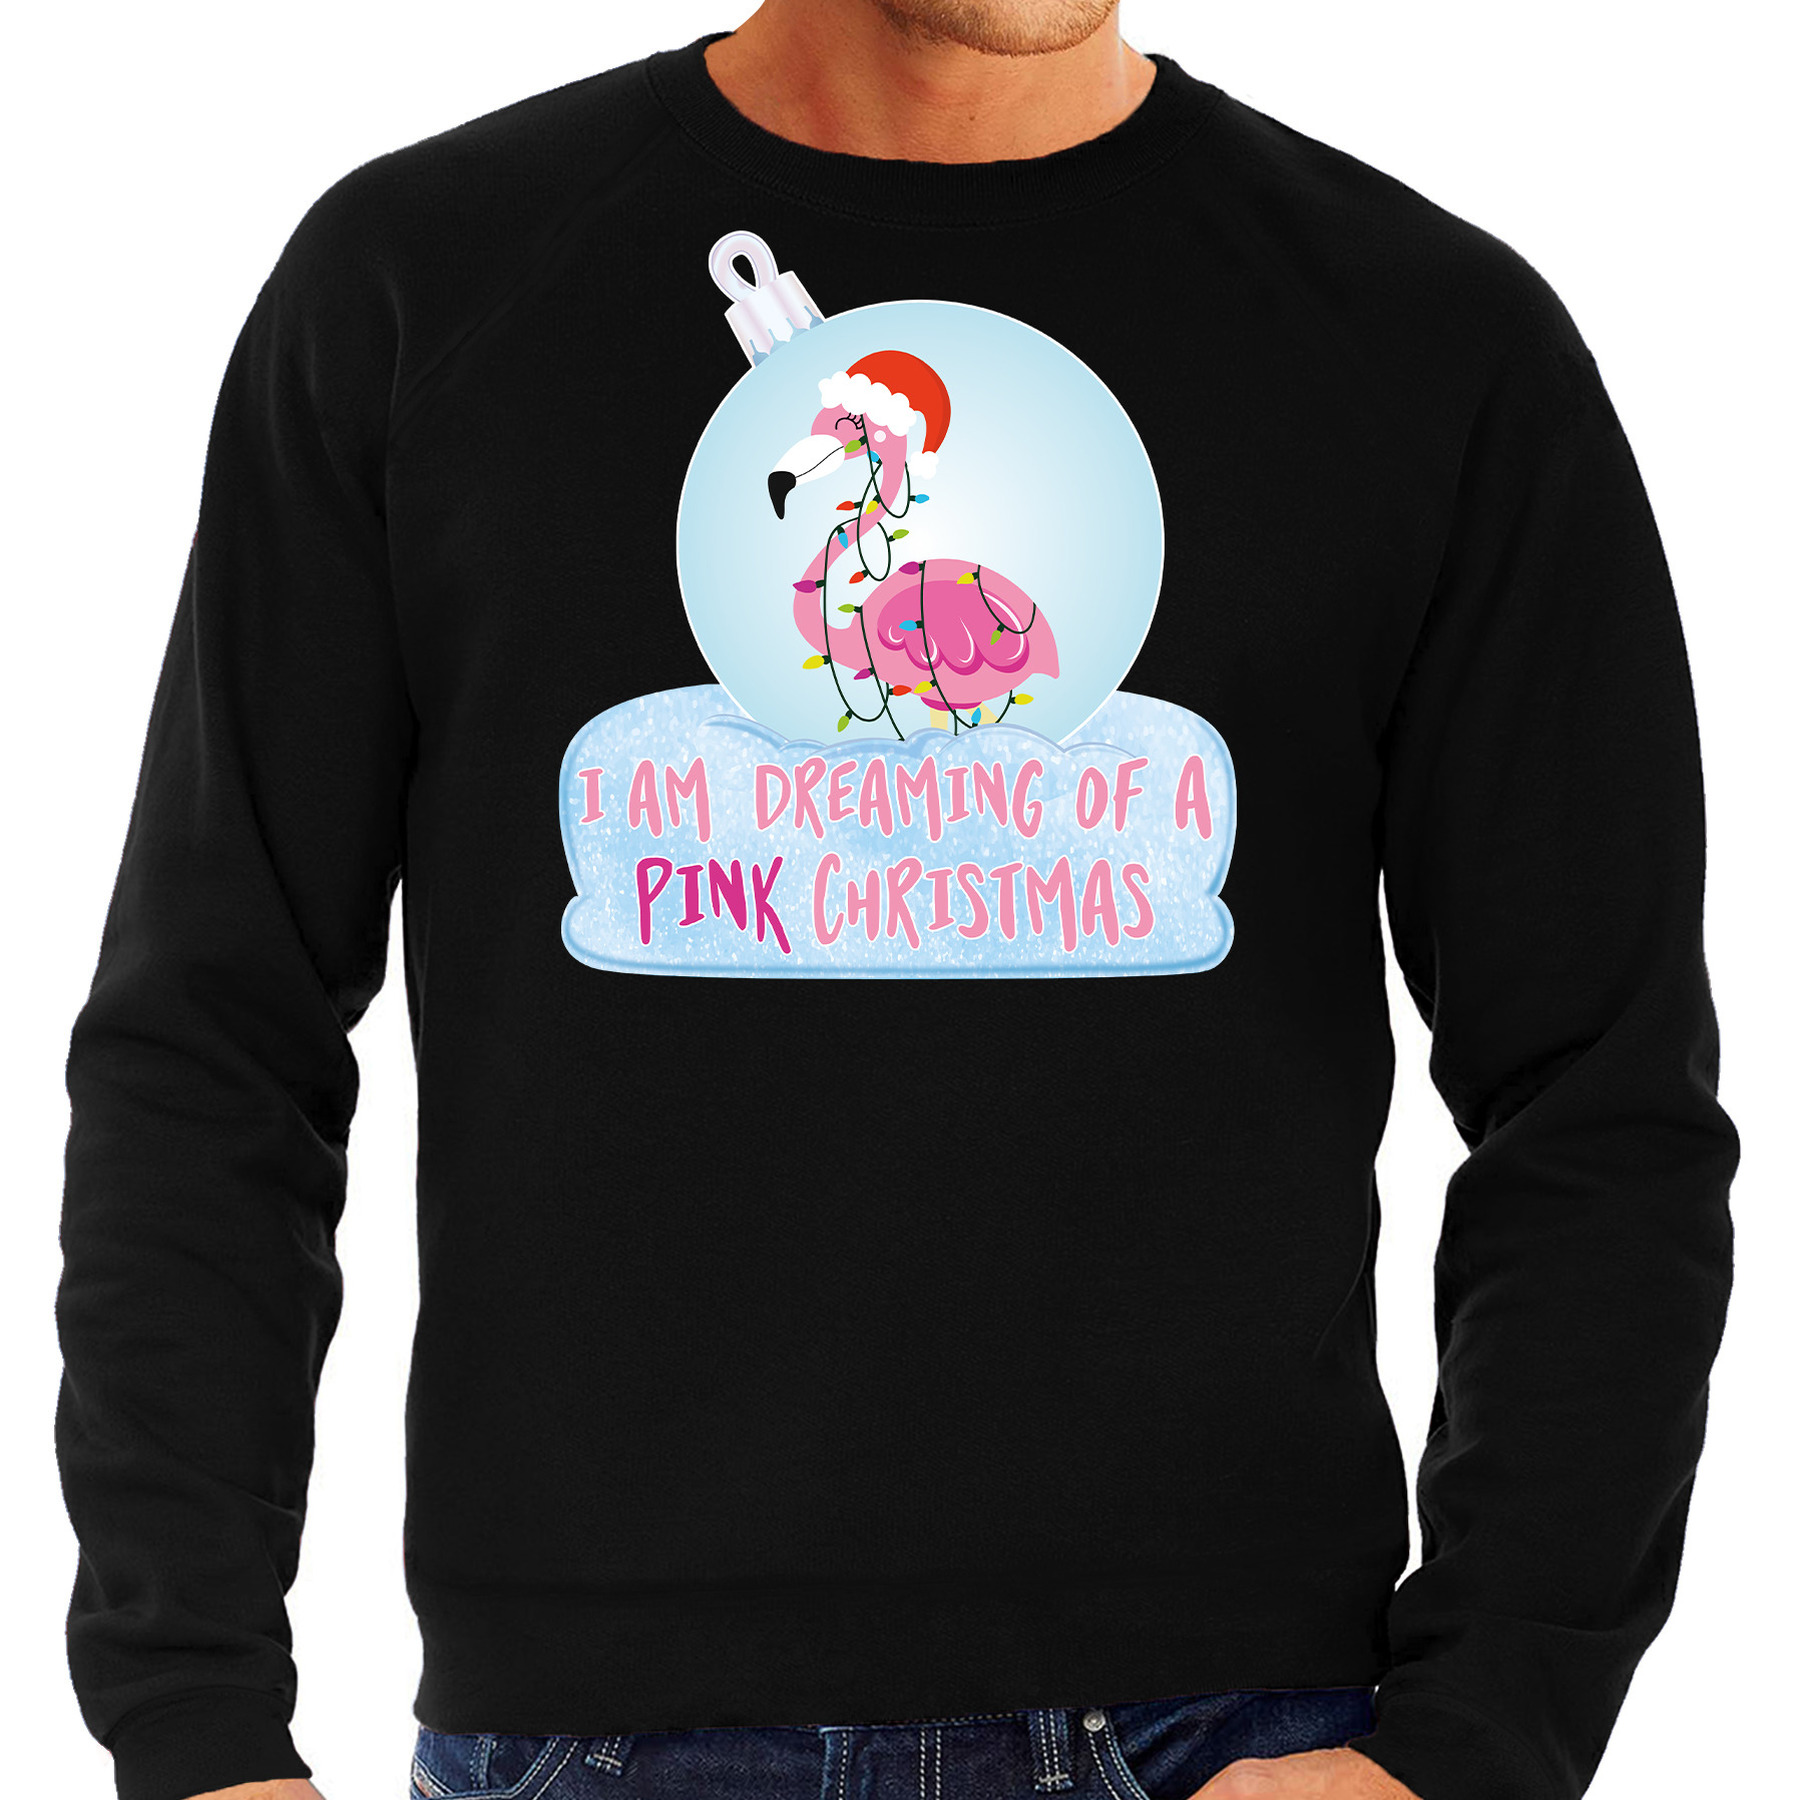 Flamingo Kerstbal sweater-Kerst outfit I am dreaming of a pink Christmas zwart voor heren